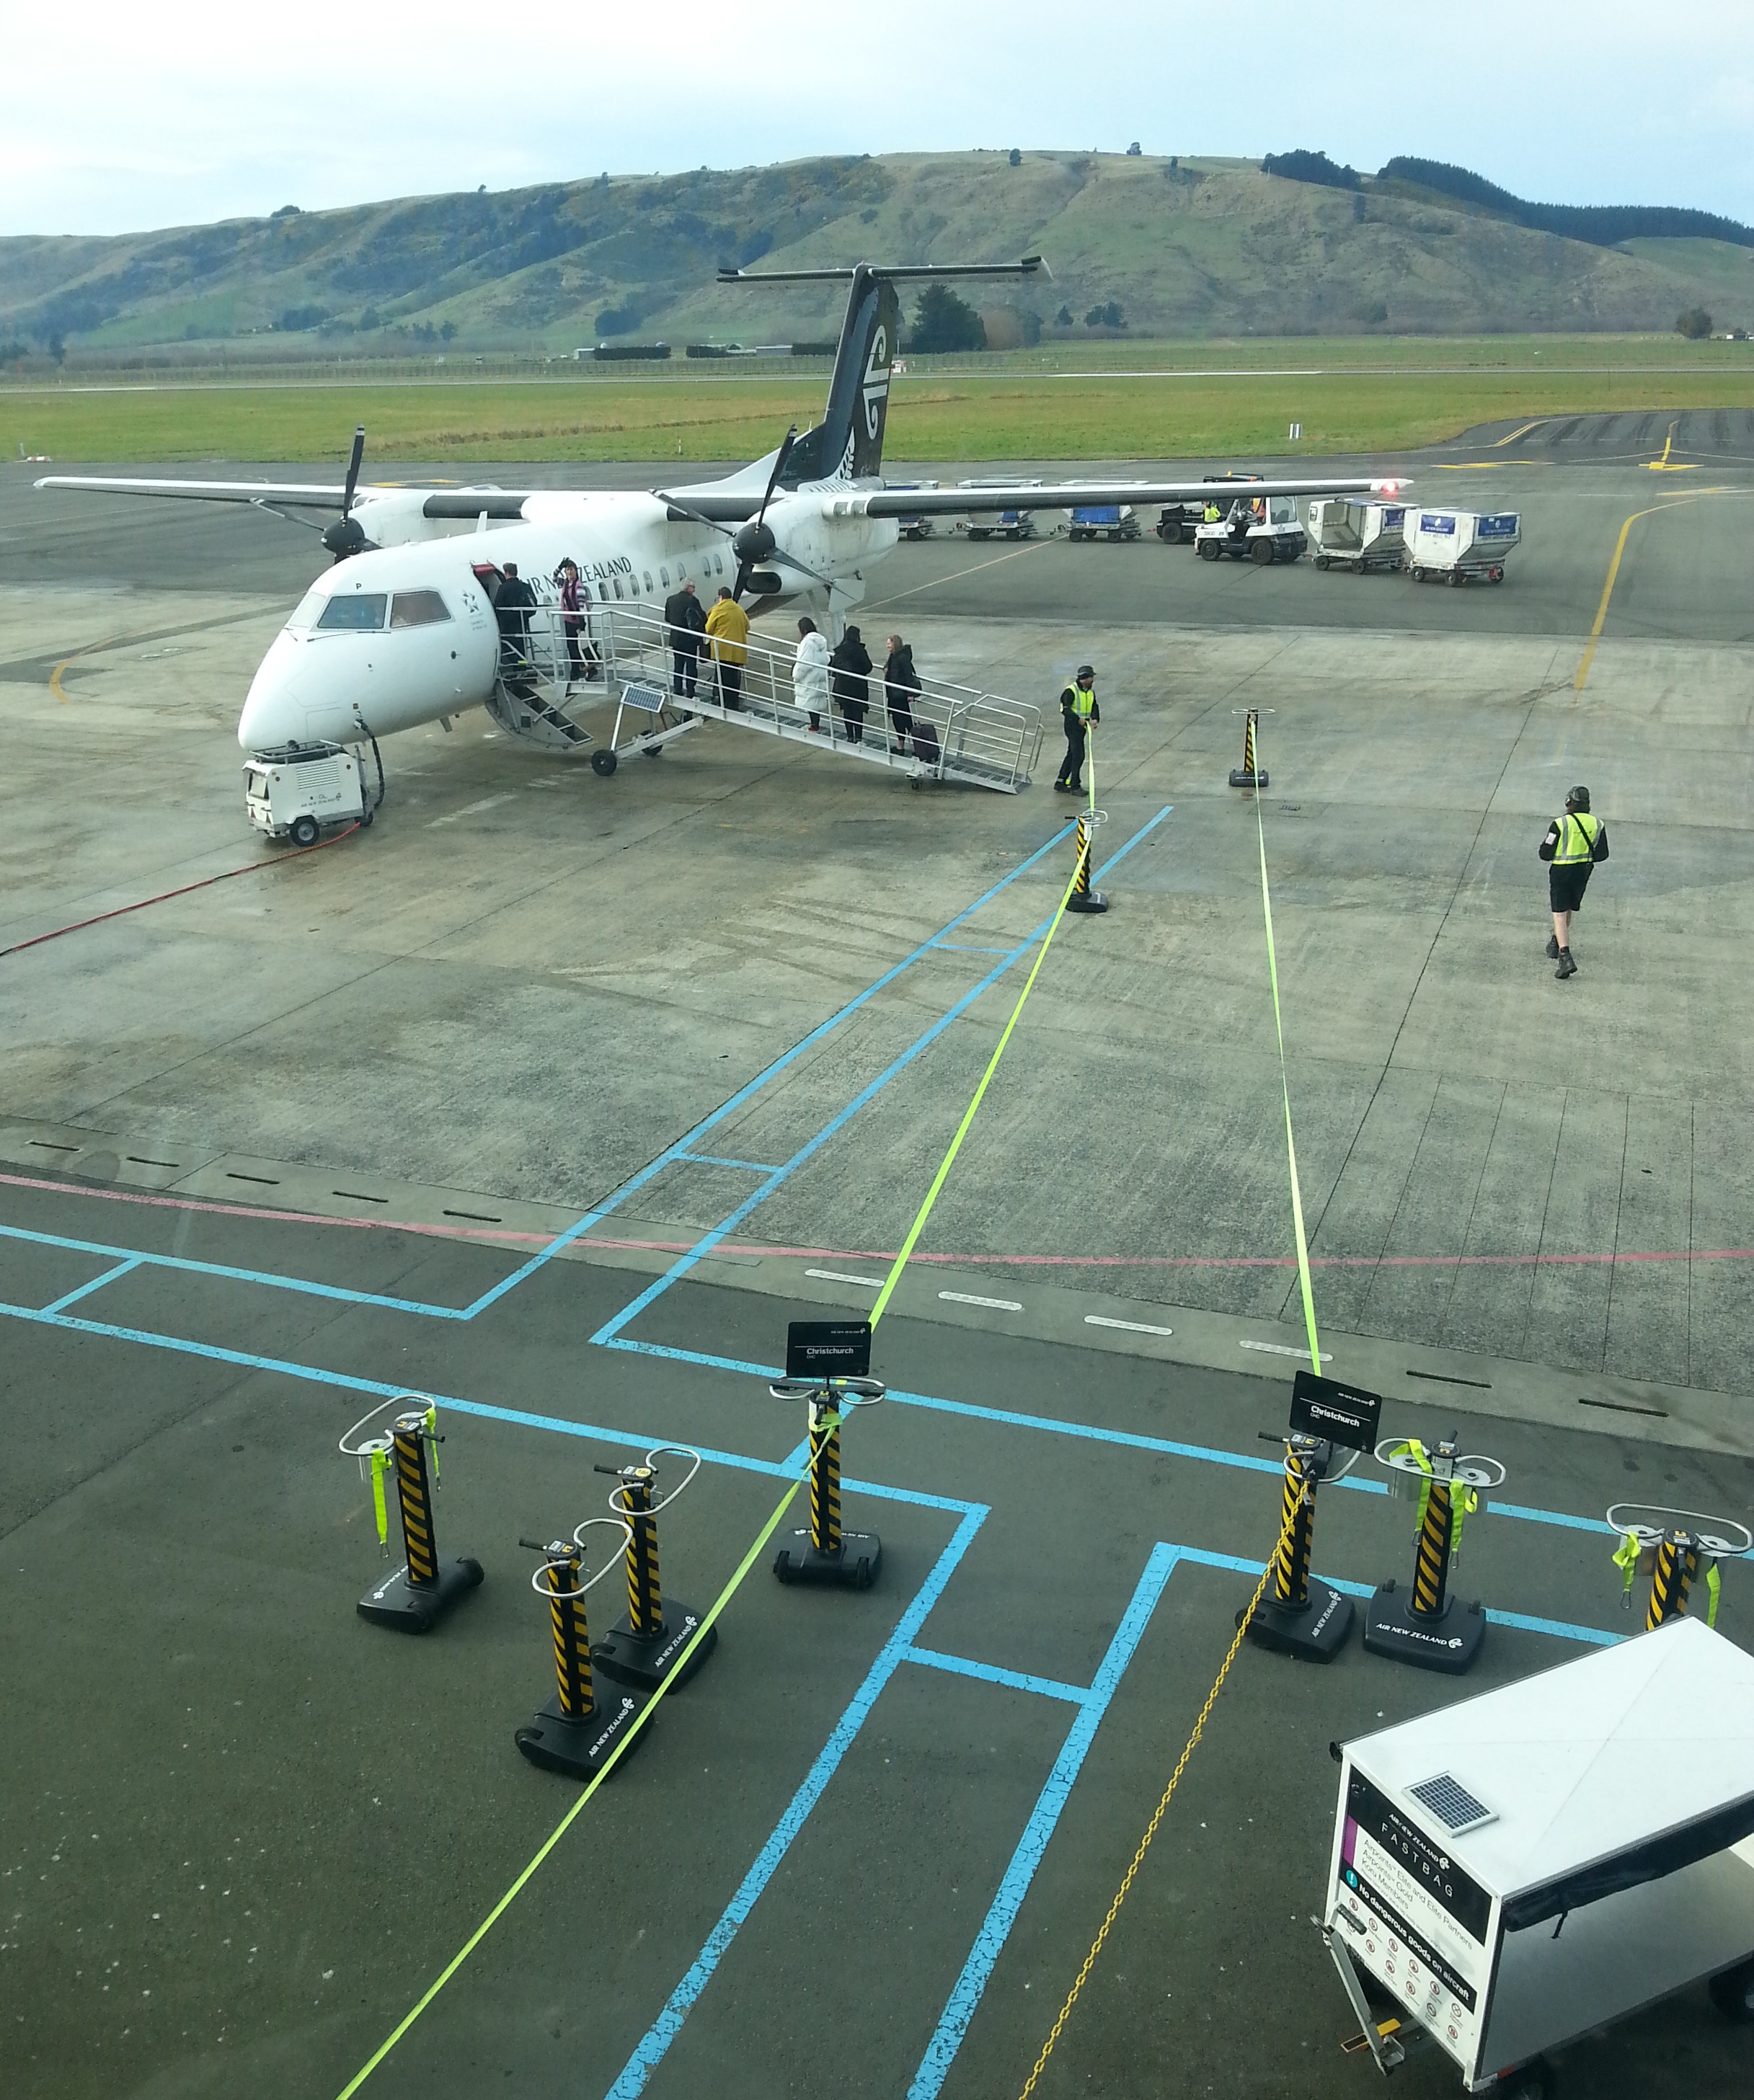 A quarter of New Zealand's pilots face redundancy